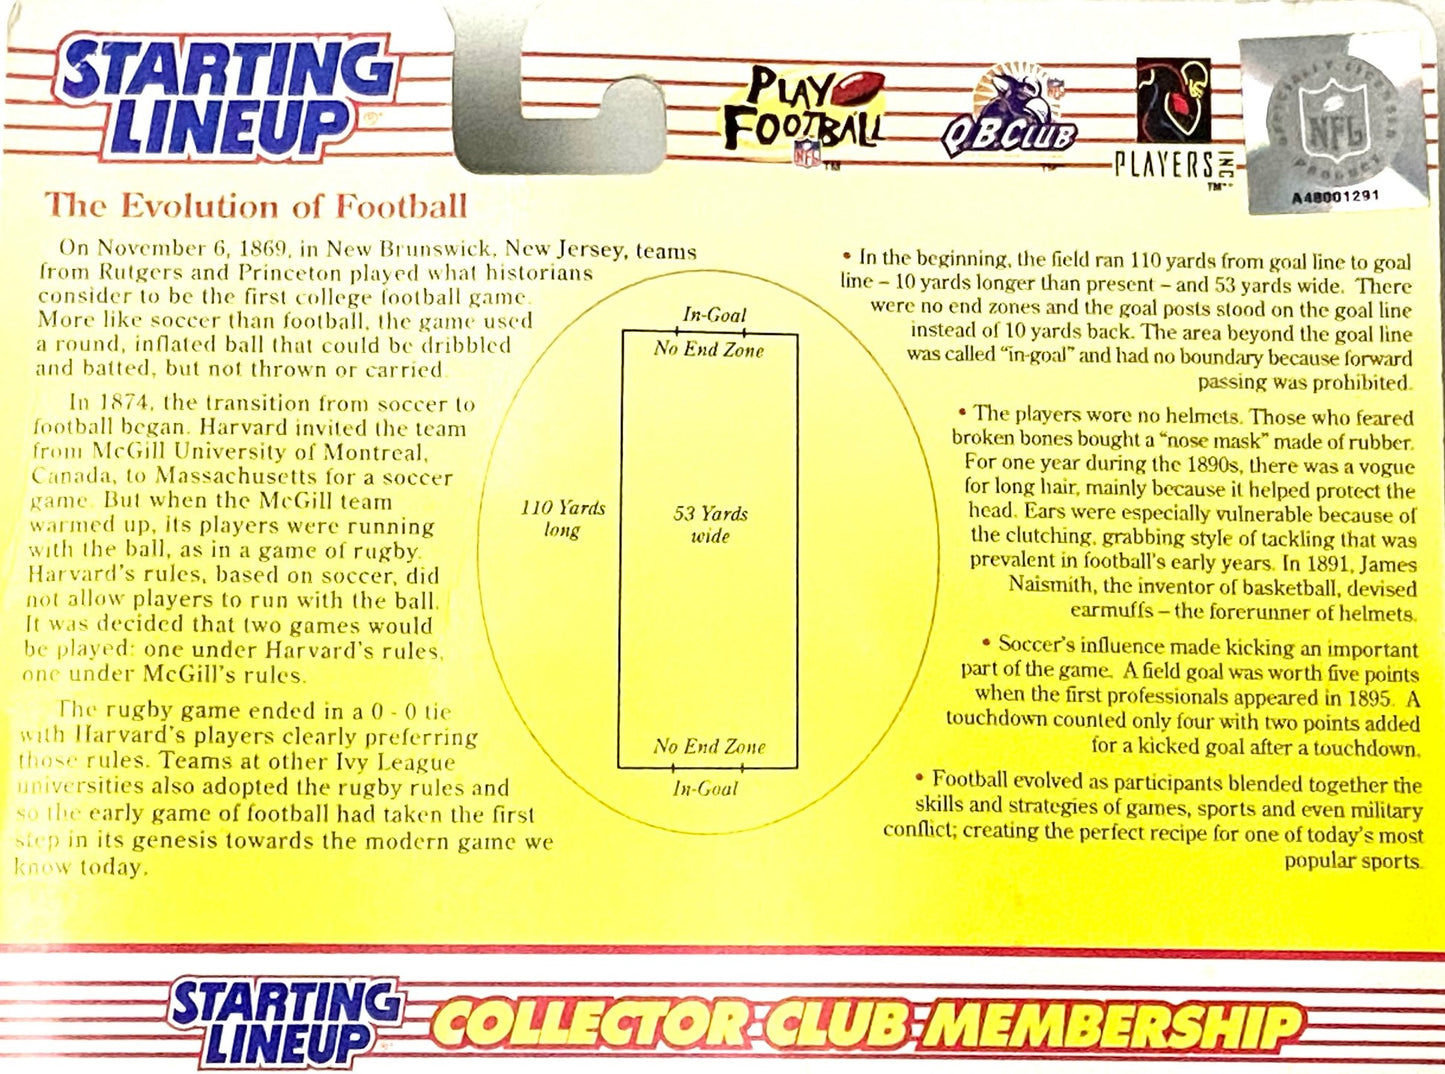 Corey Dillon 1998 NFL Cincinnati Bengals Starting Lineup Figurine by Kenner